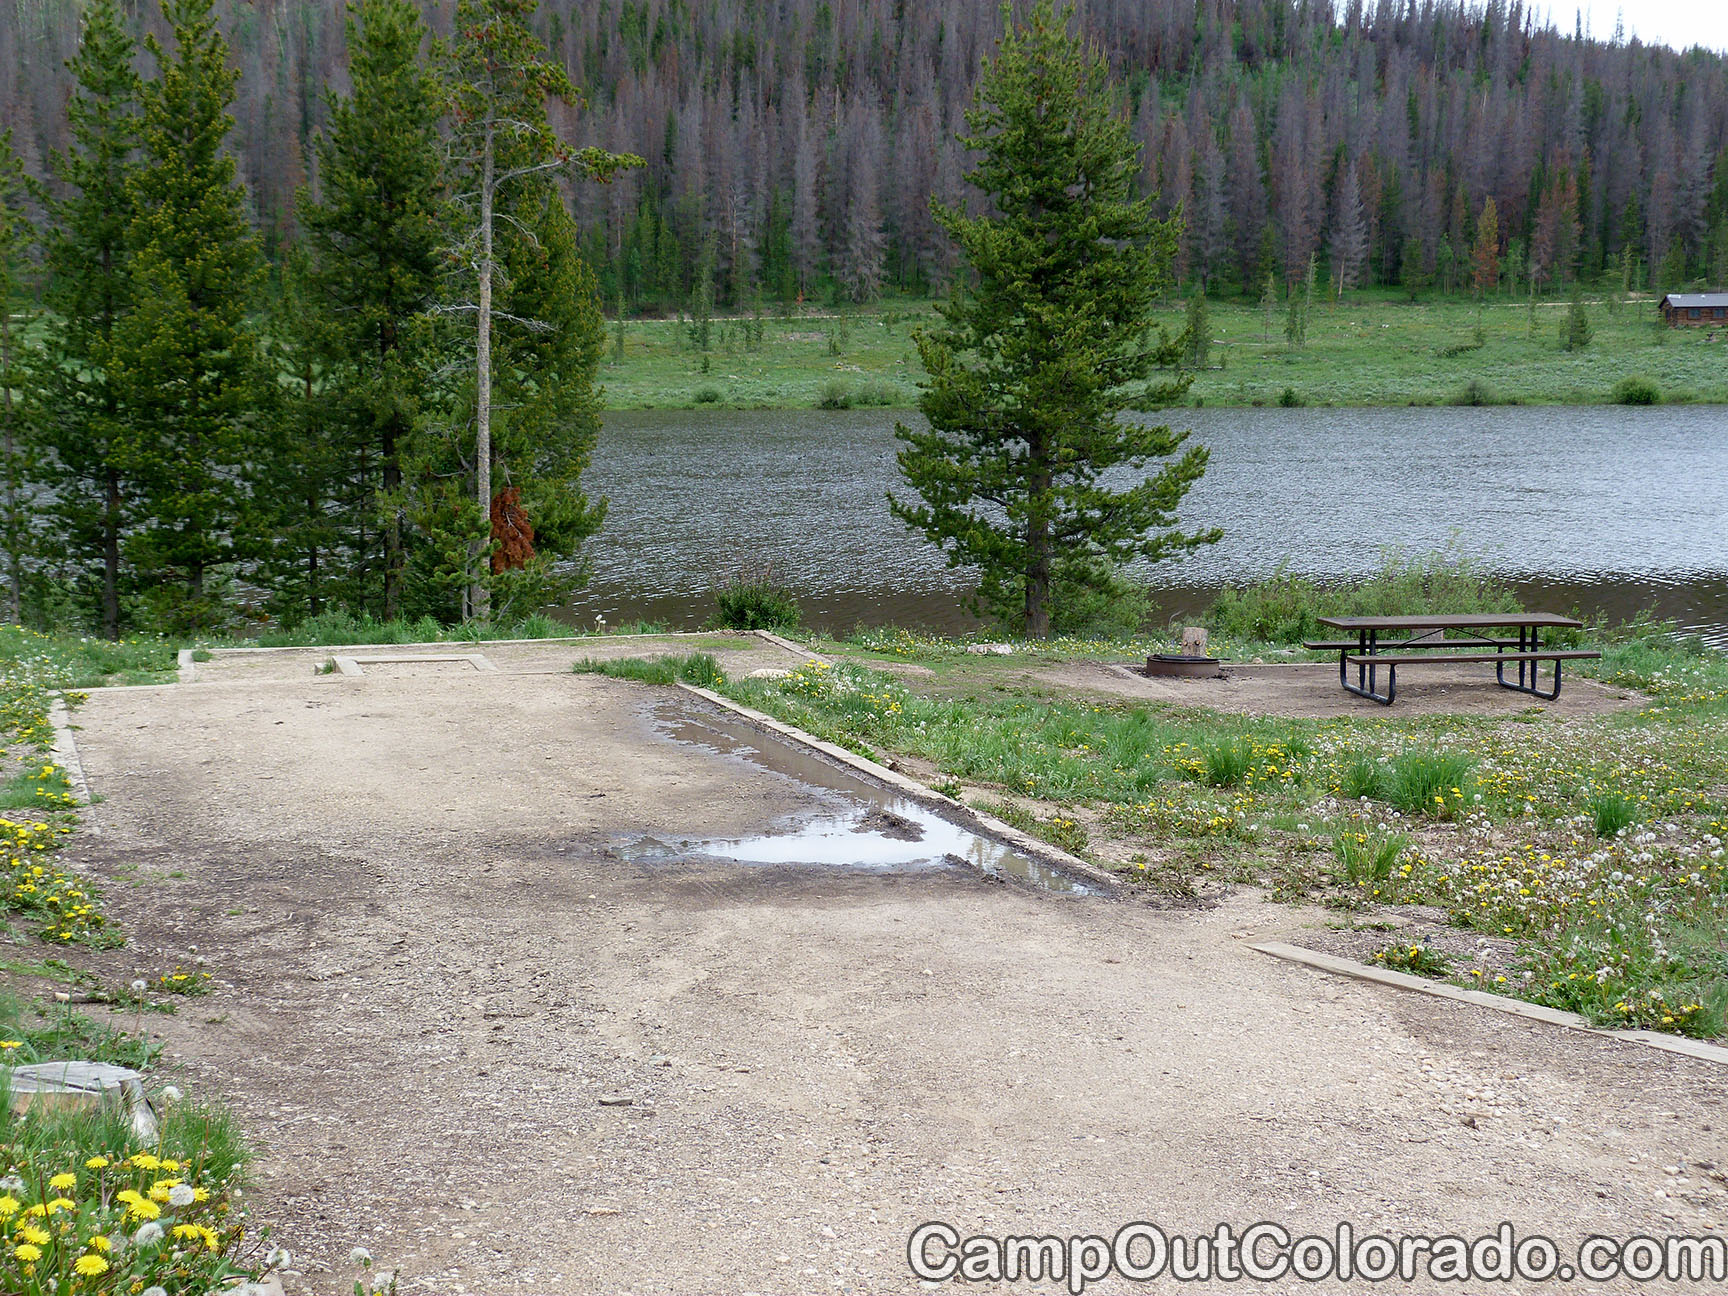 Campoutcolorado-north-michigan-reservoir-campground-long-drive-campsite